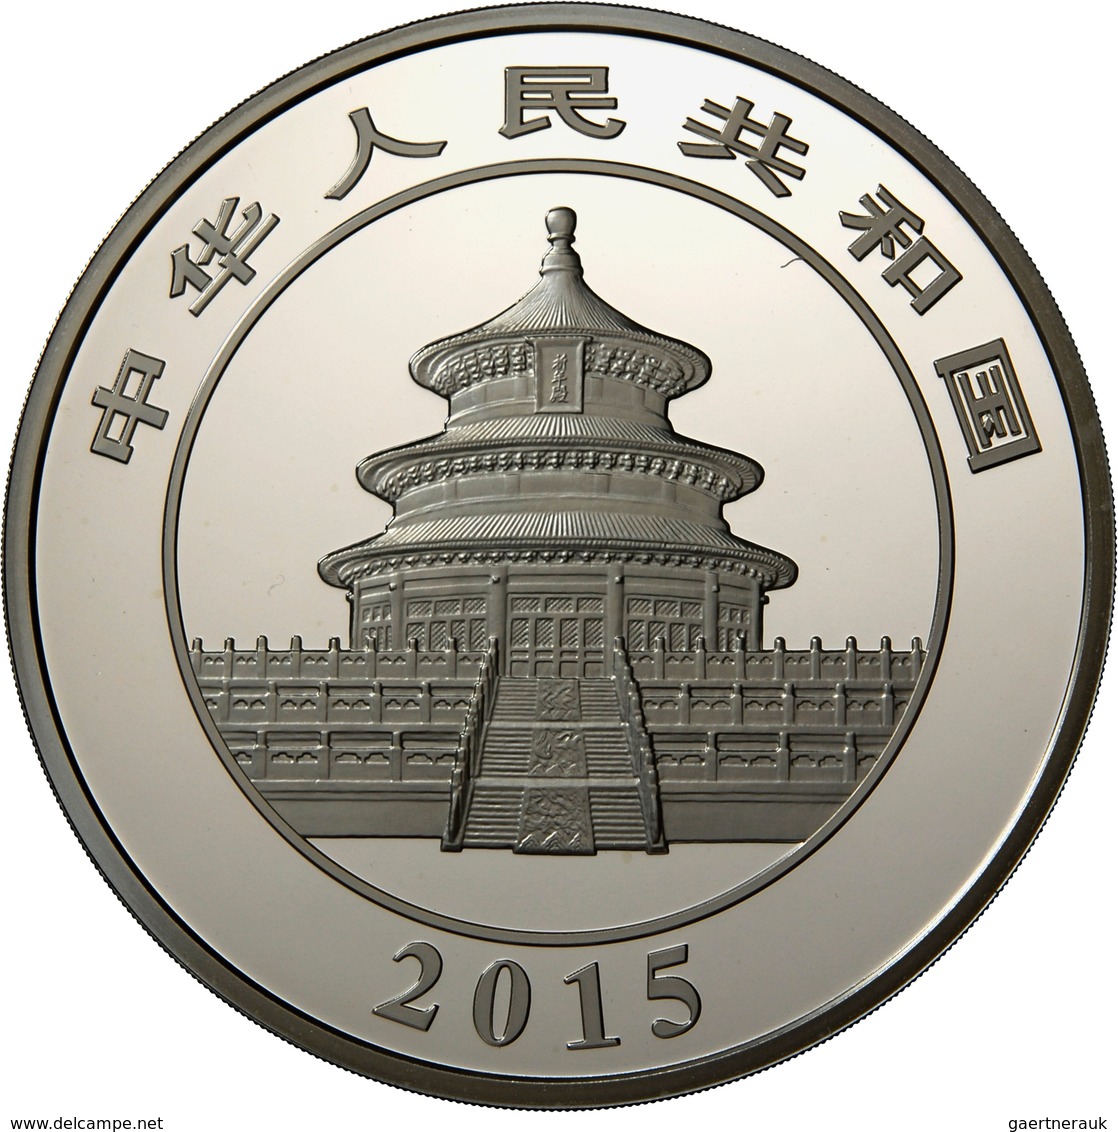 China - Volksrepublik: 300 Yuan 2015, Silber Panda, 1 Kg 999/1000 Silber. Inklusive Zertifikat, Etui - Cina